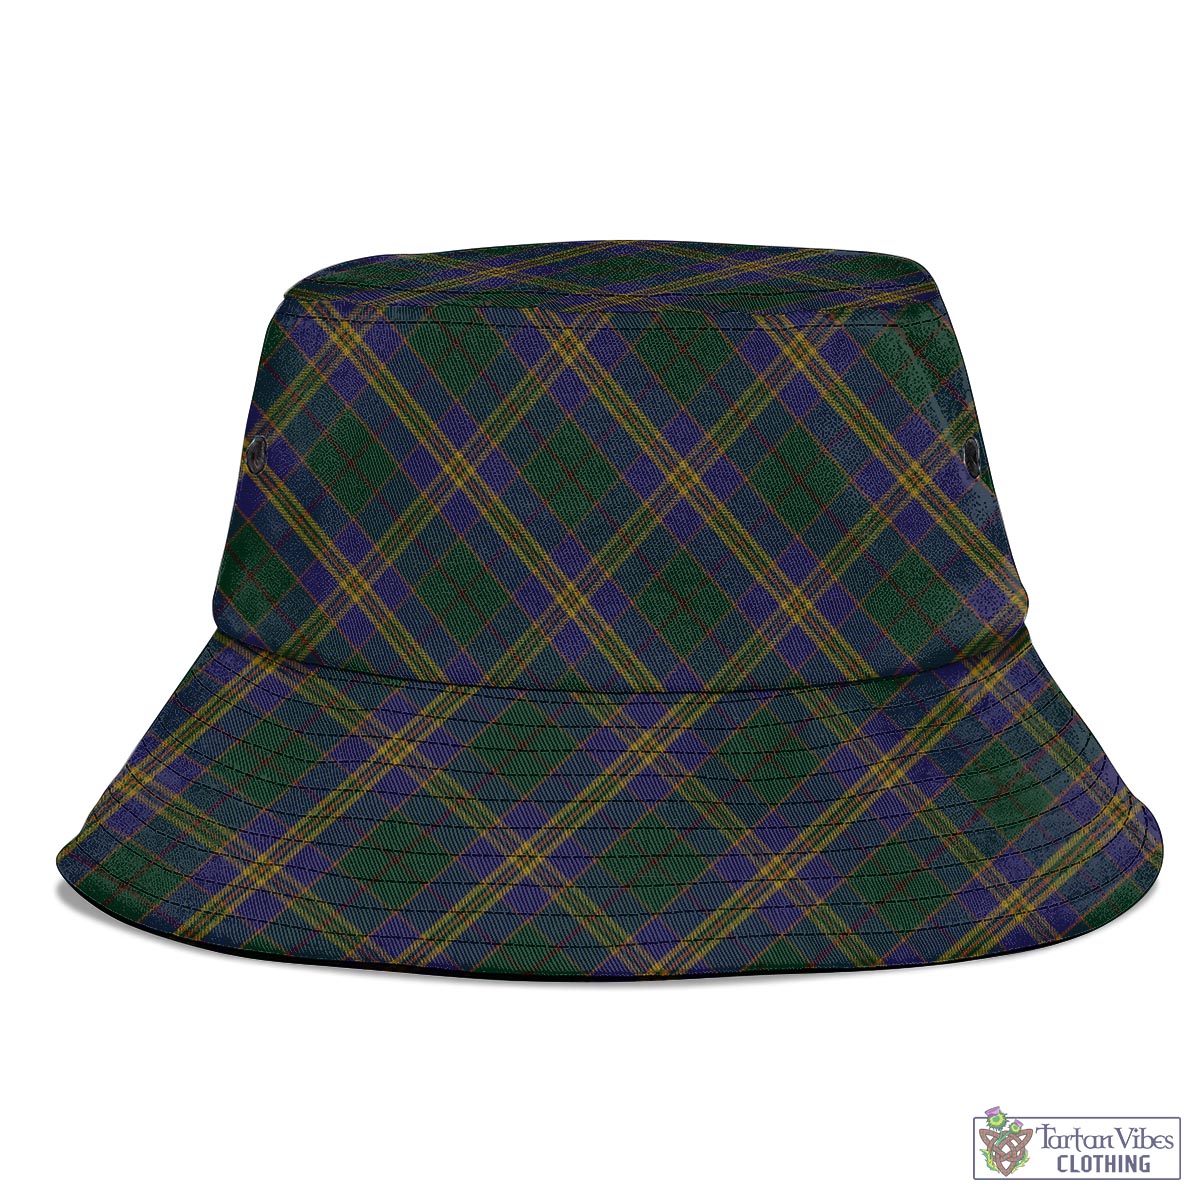 Tartan Vibes Clothing Kilkenny County Ireland Tartan Bucket Hat